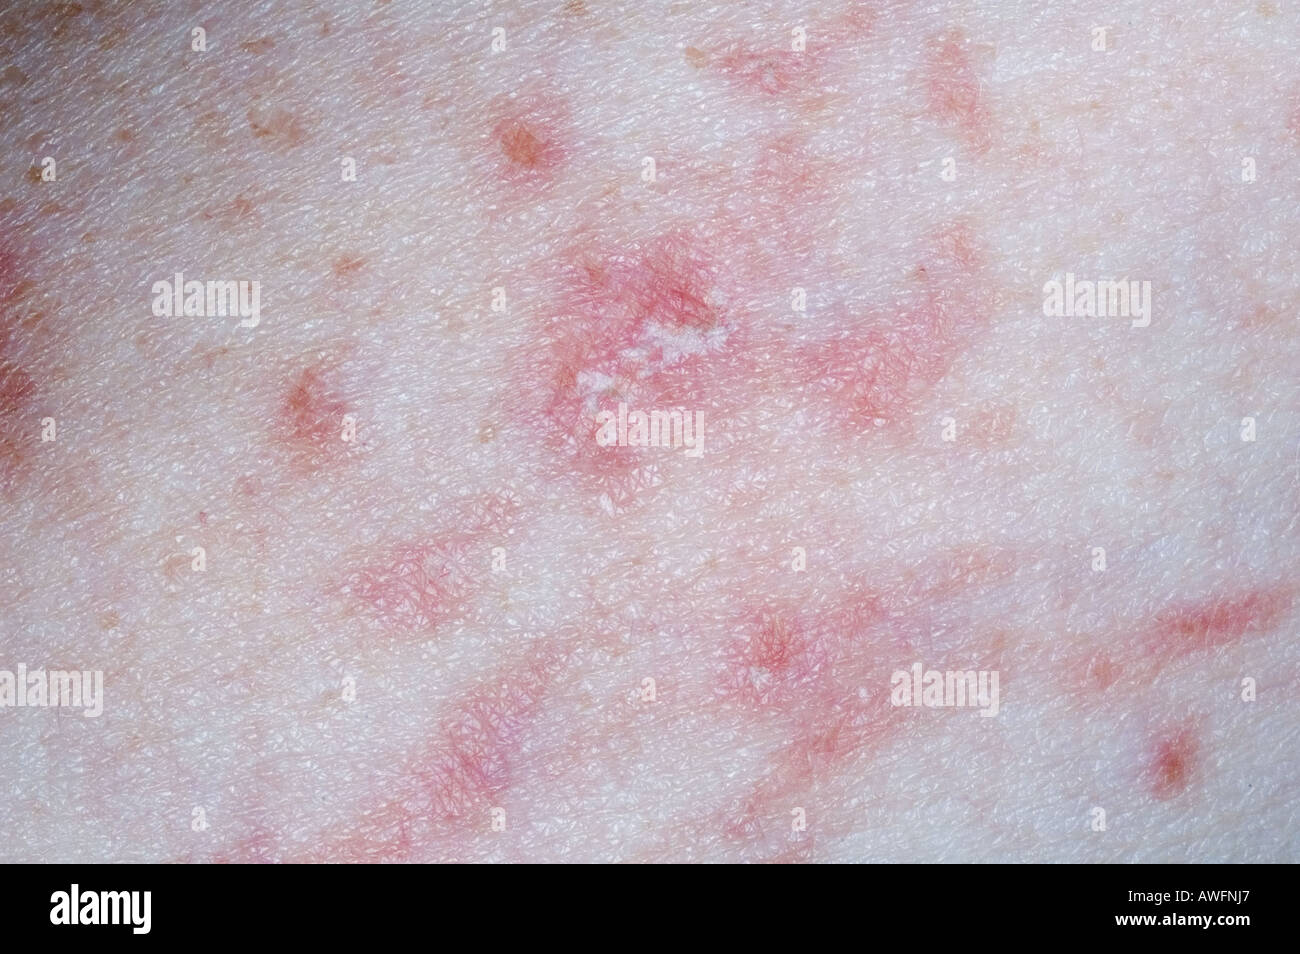 Eczema illustrating the Koebner Phenomenon Stock Photo - Alamy